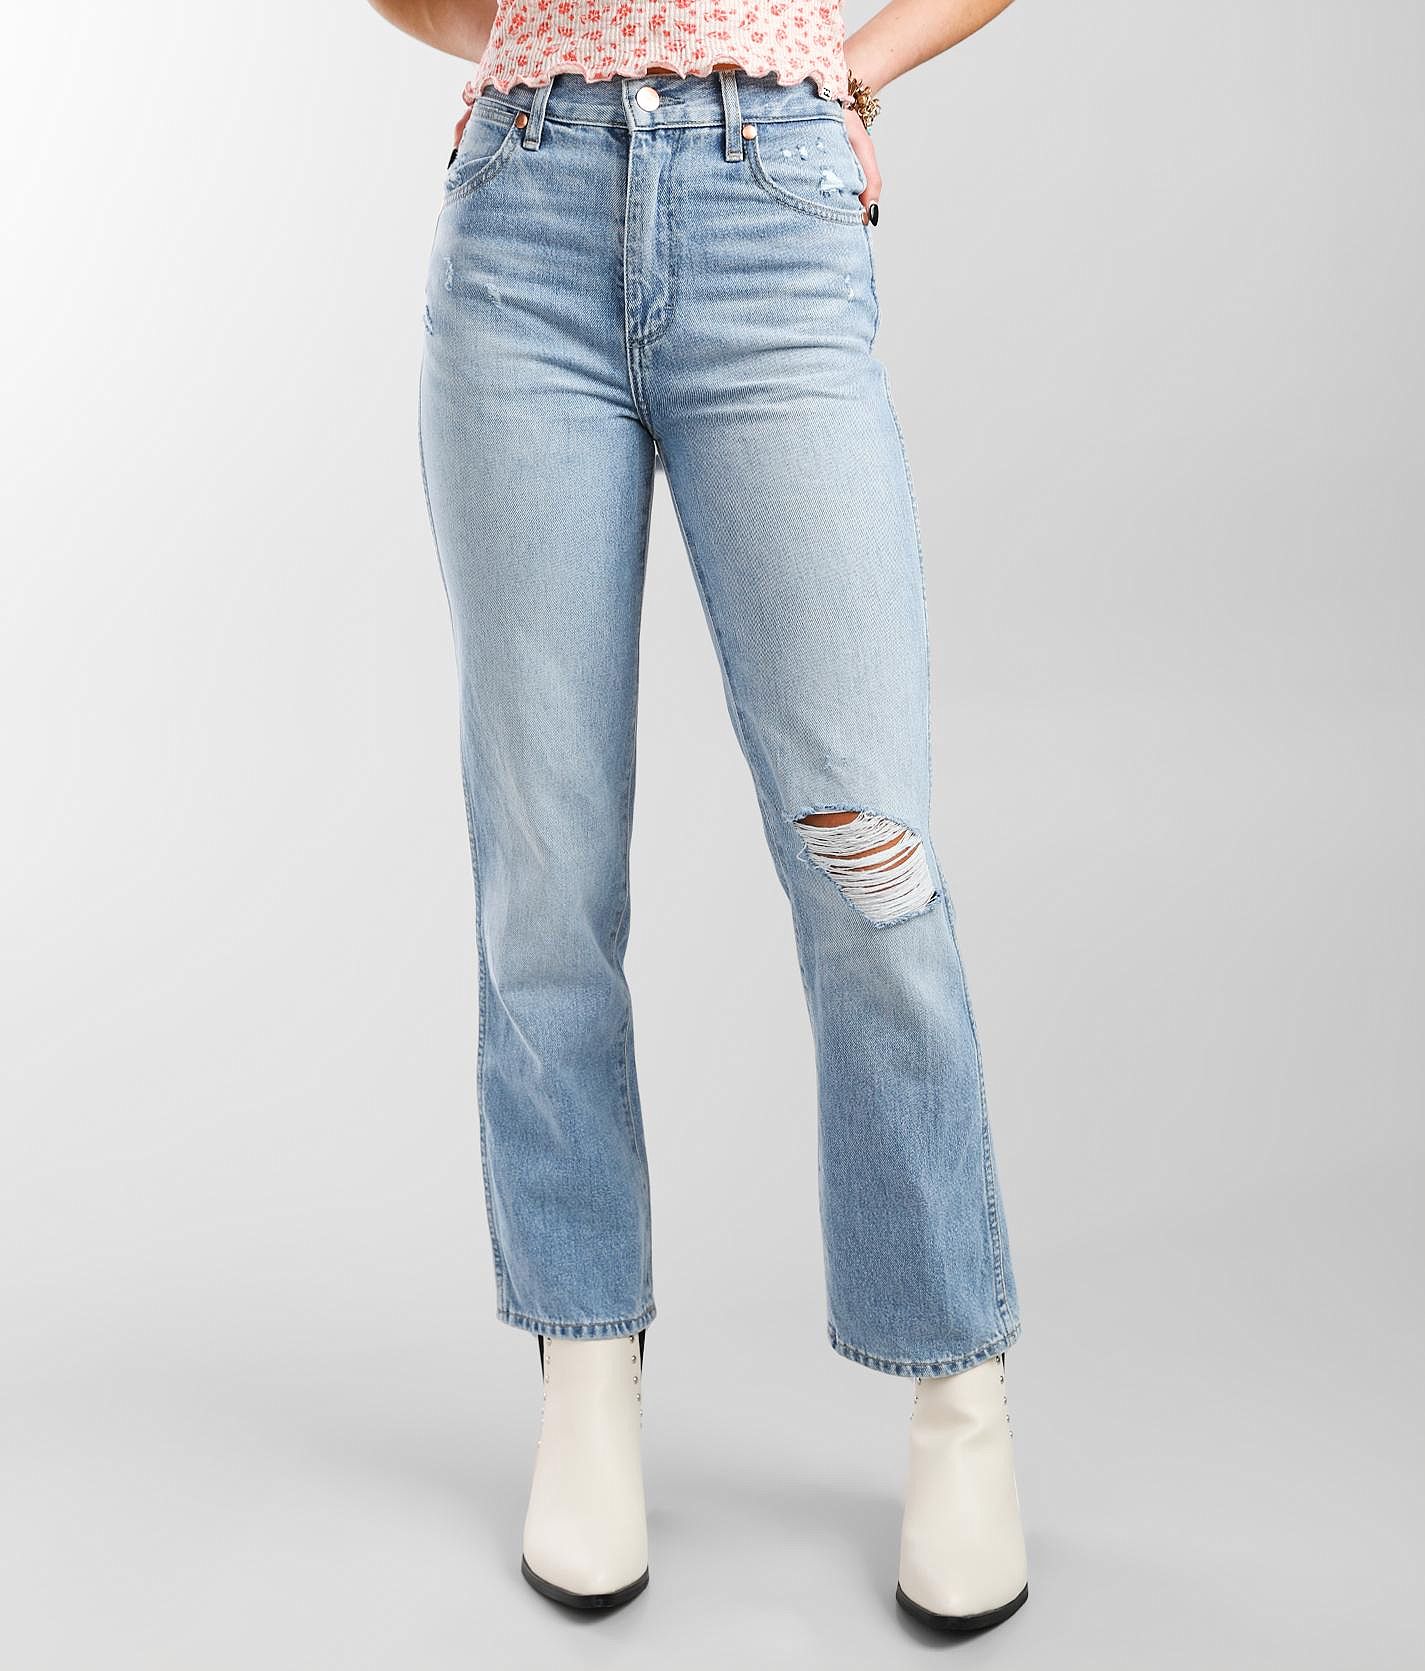 Vintage Wrangler Jeans, 25 26 Waist High Waisted Jeans, Slim Fit